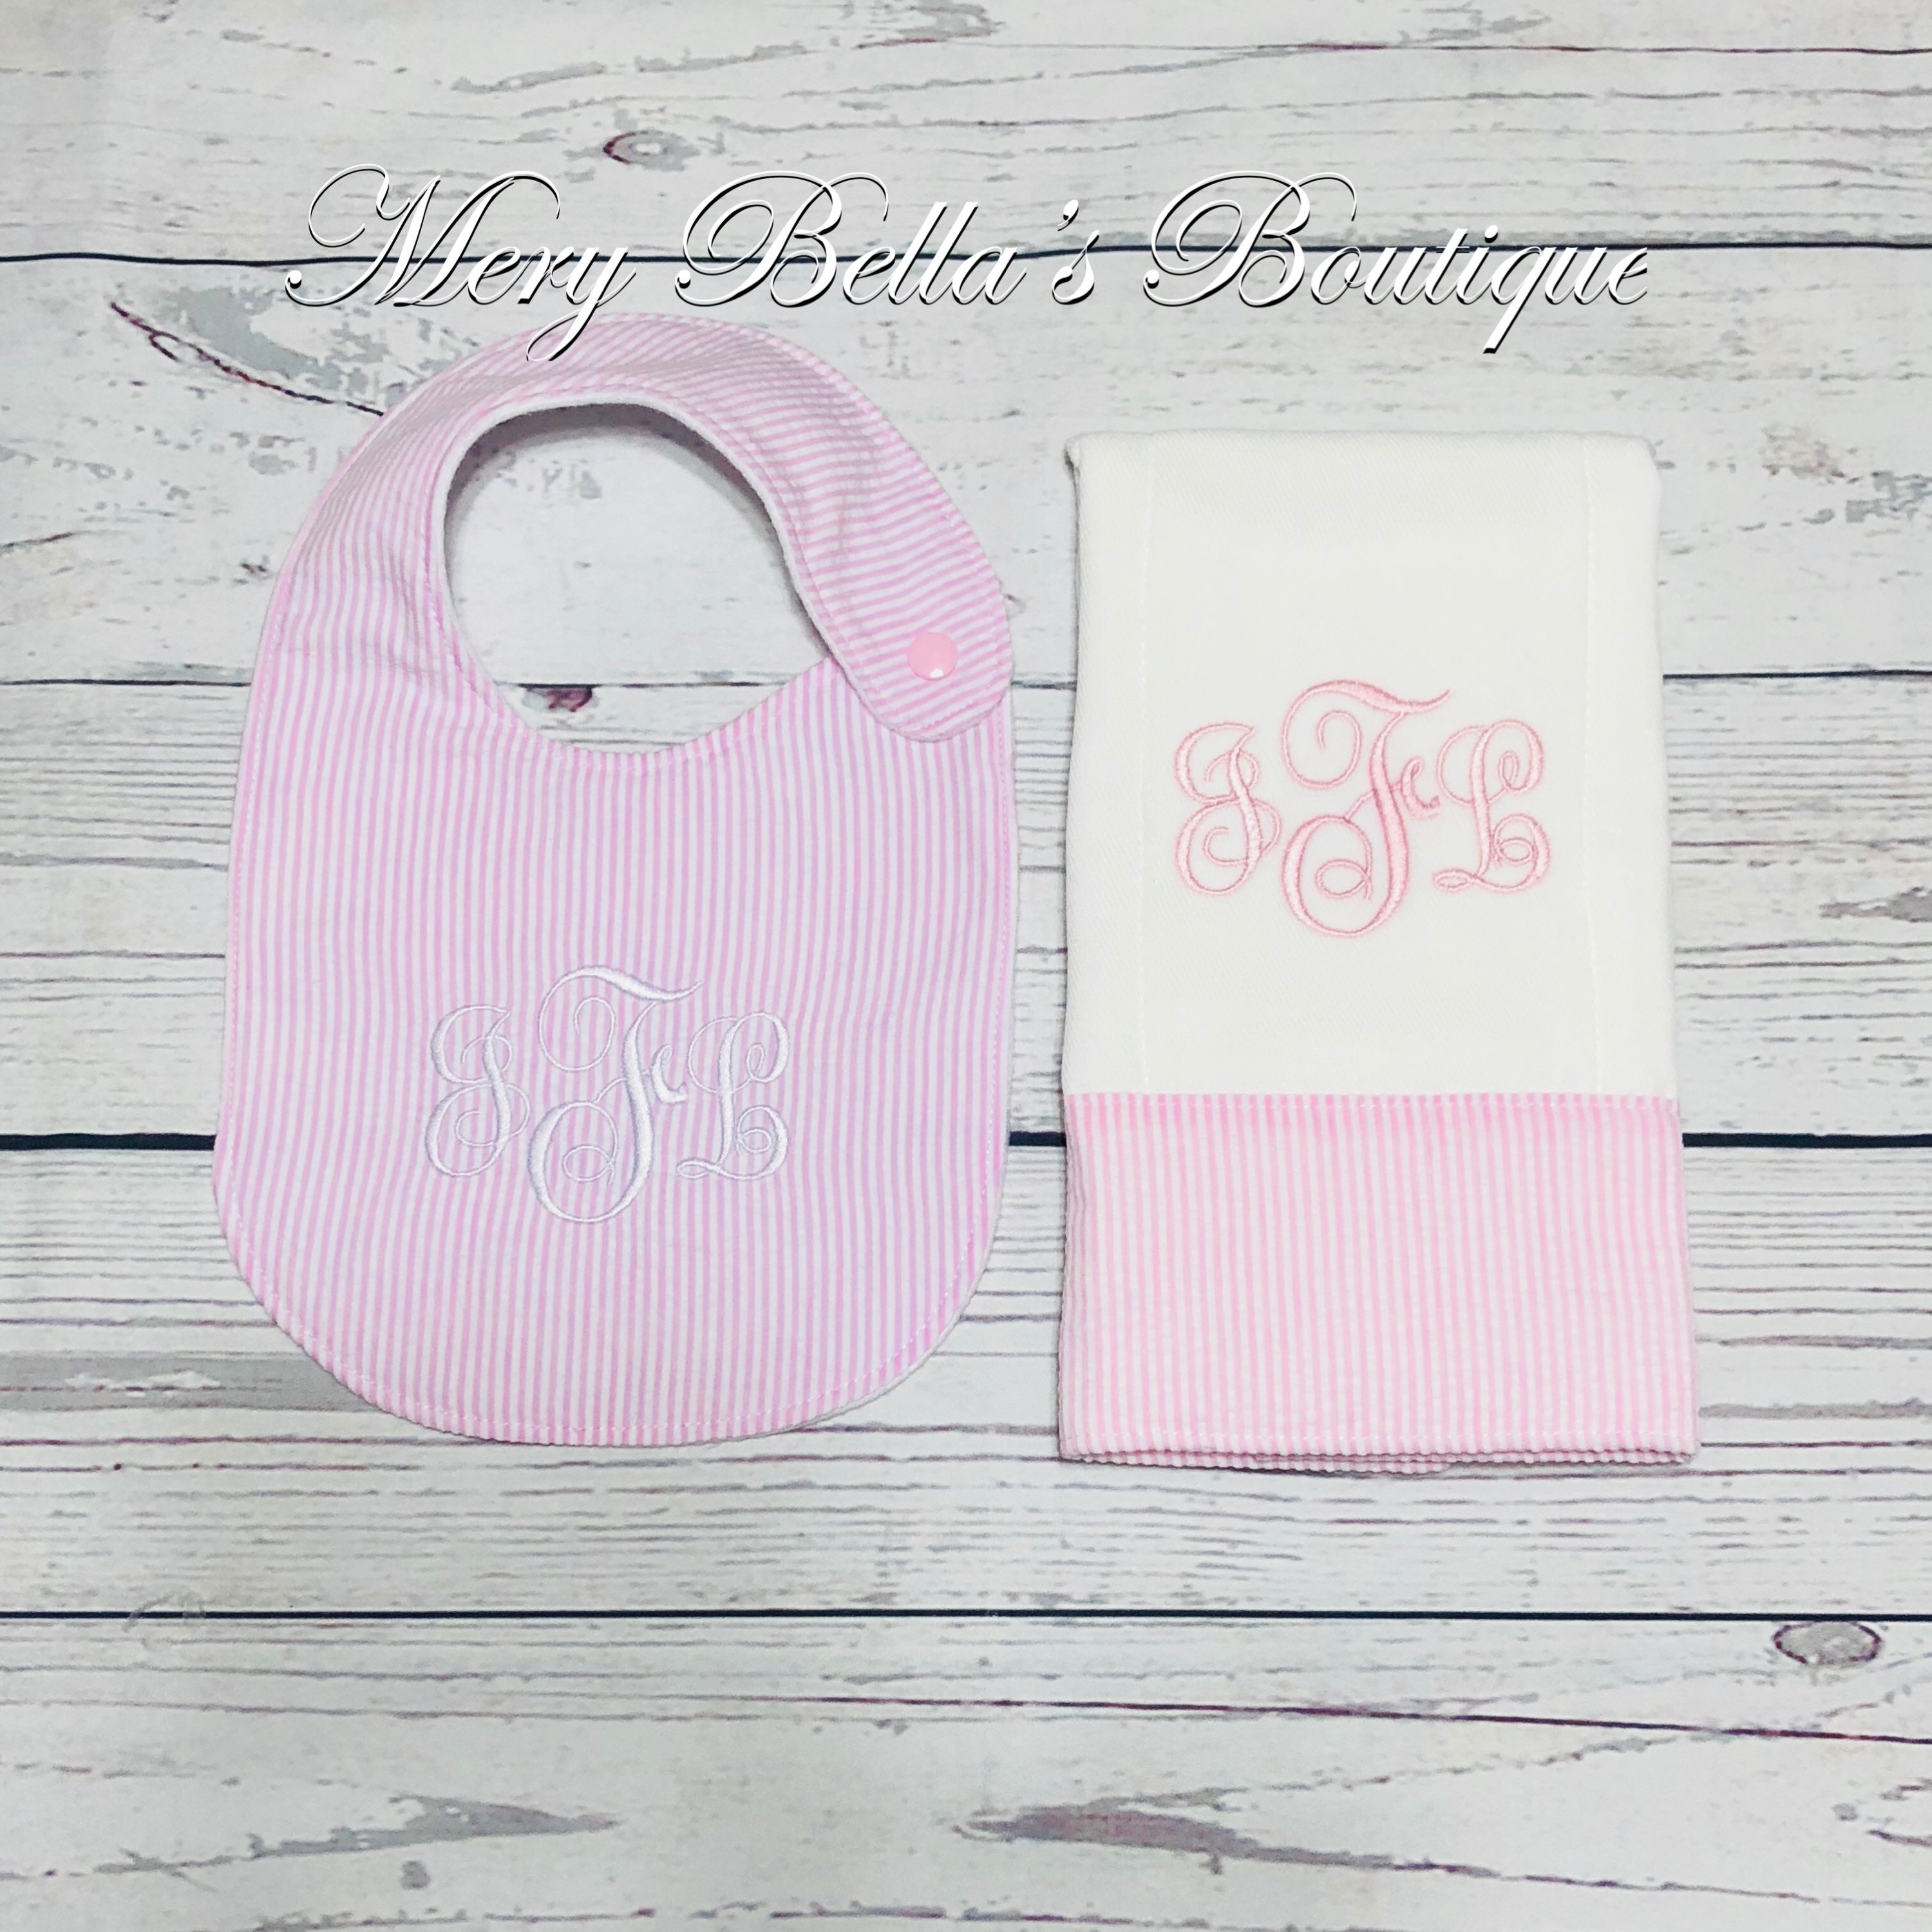 personalized bib burp cloth classic monogram baby girl Baby gift customizable neutral baby baby boy twins Baby shower gift